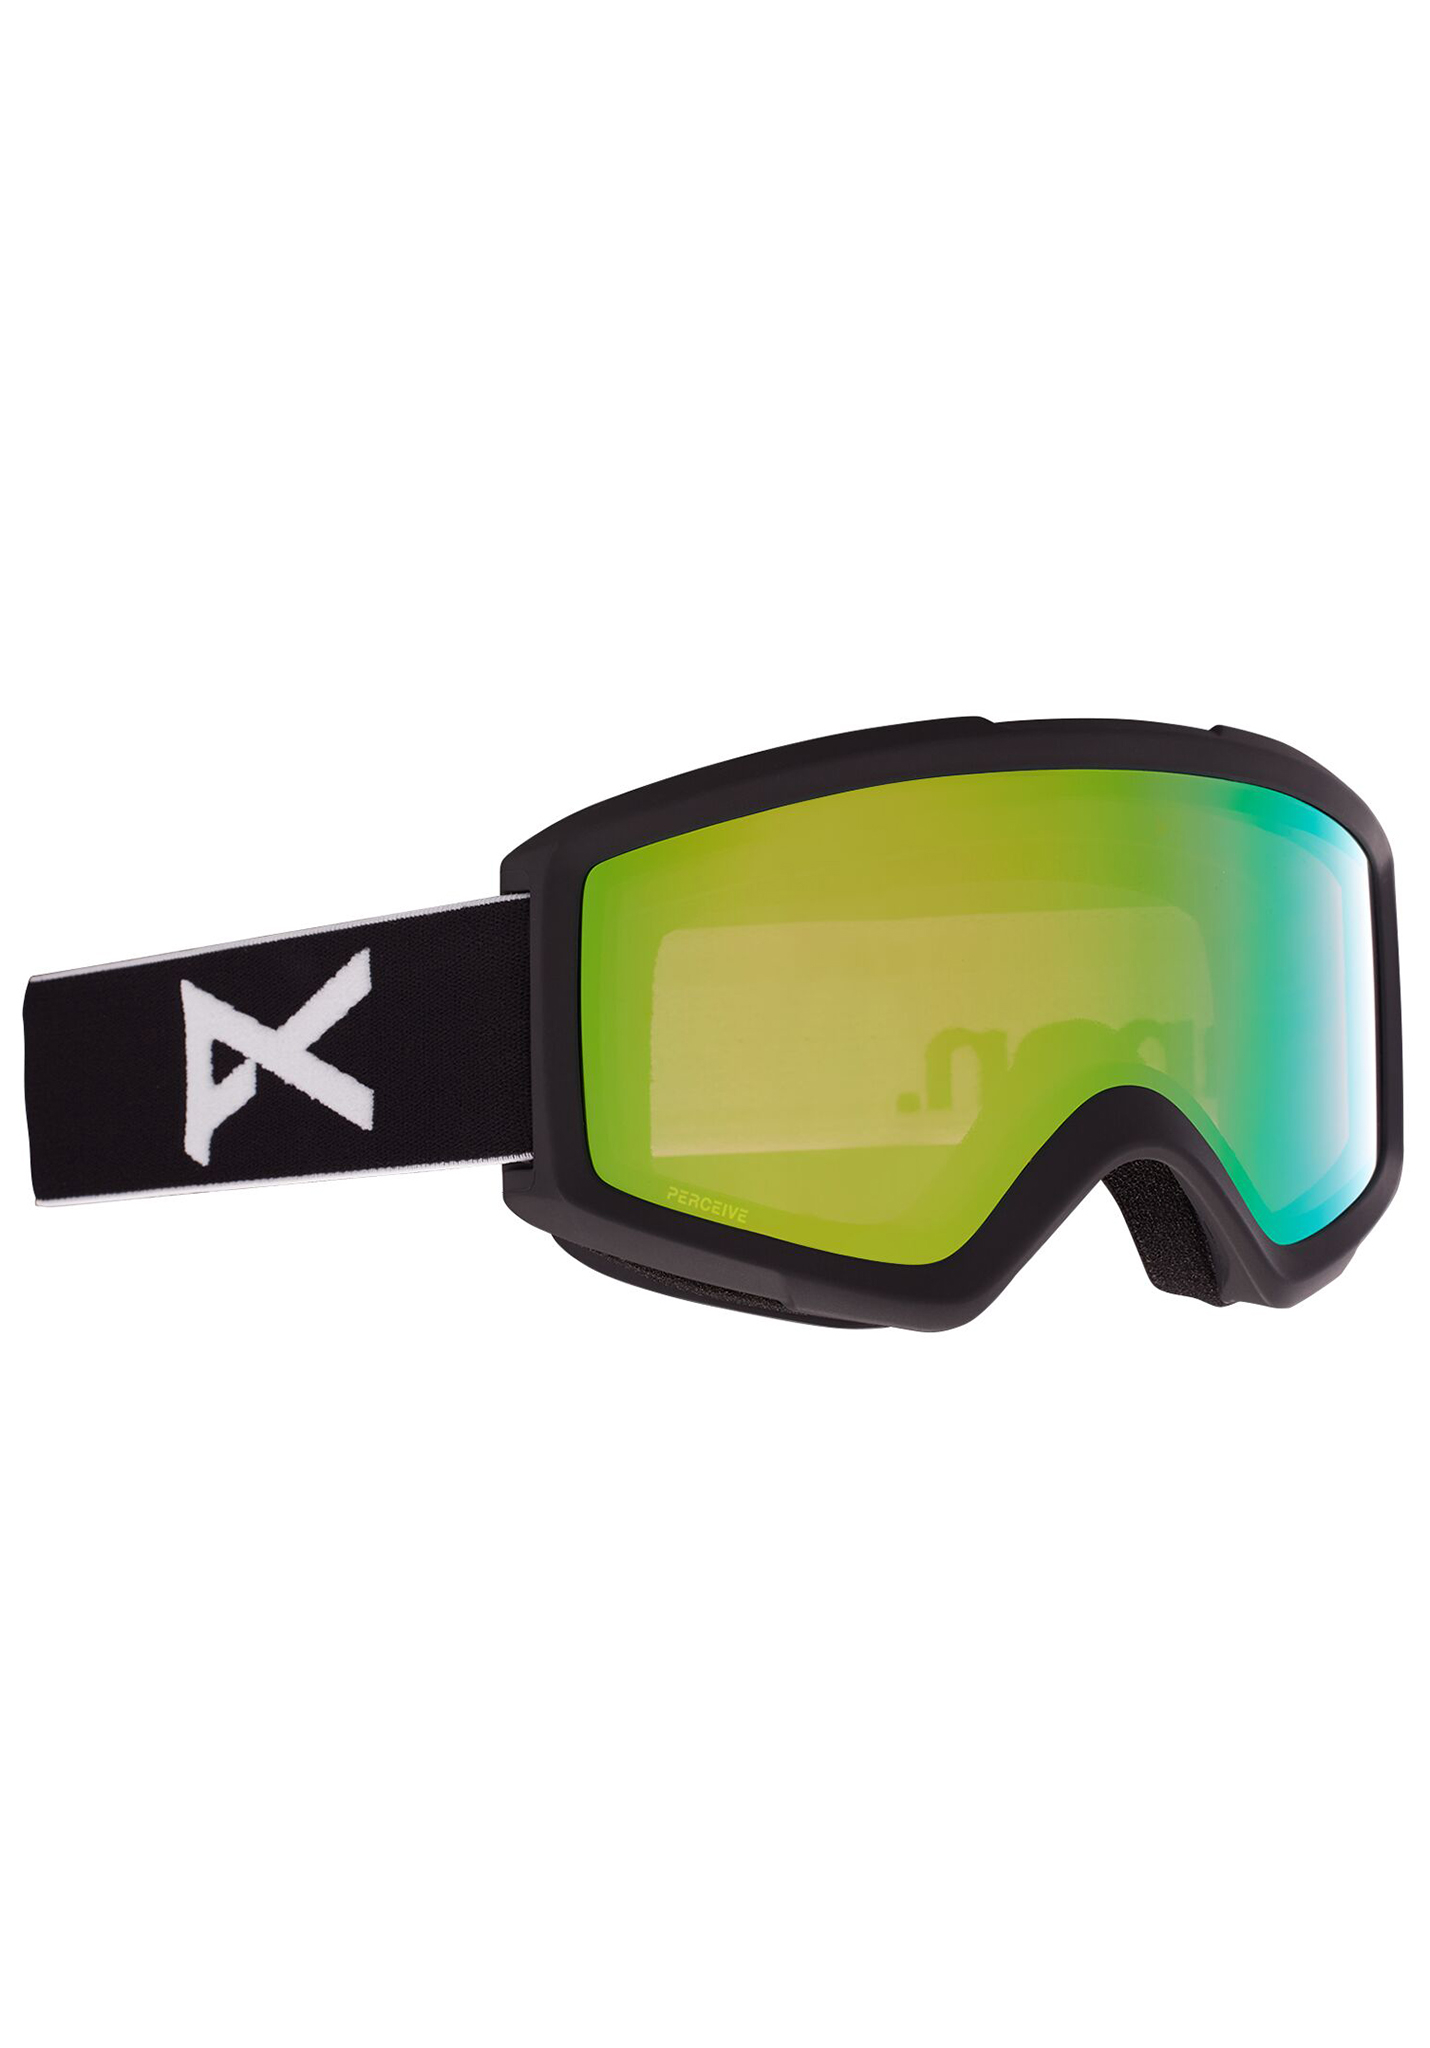 Anon Helix 2.0 Snowboardbrillen schwarz/prcv vrbl grn One Size